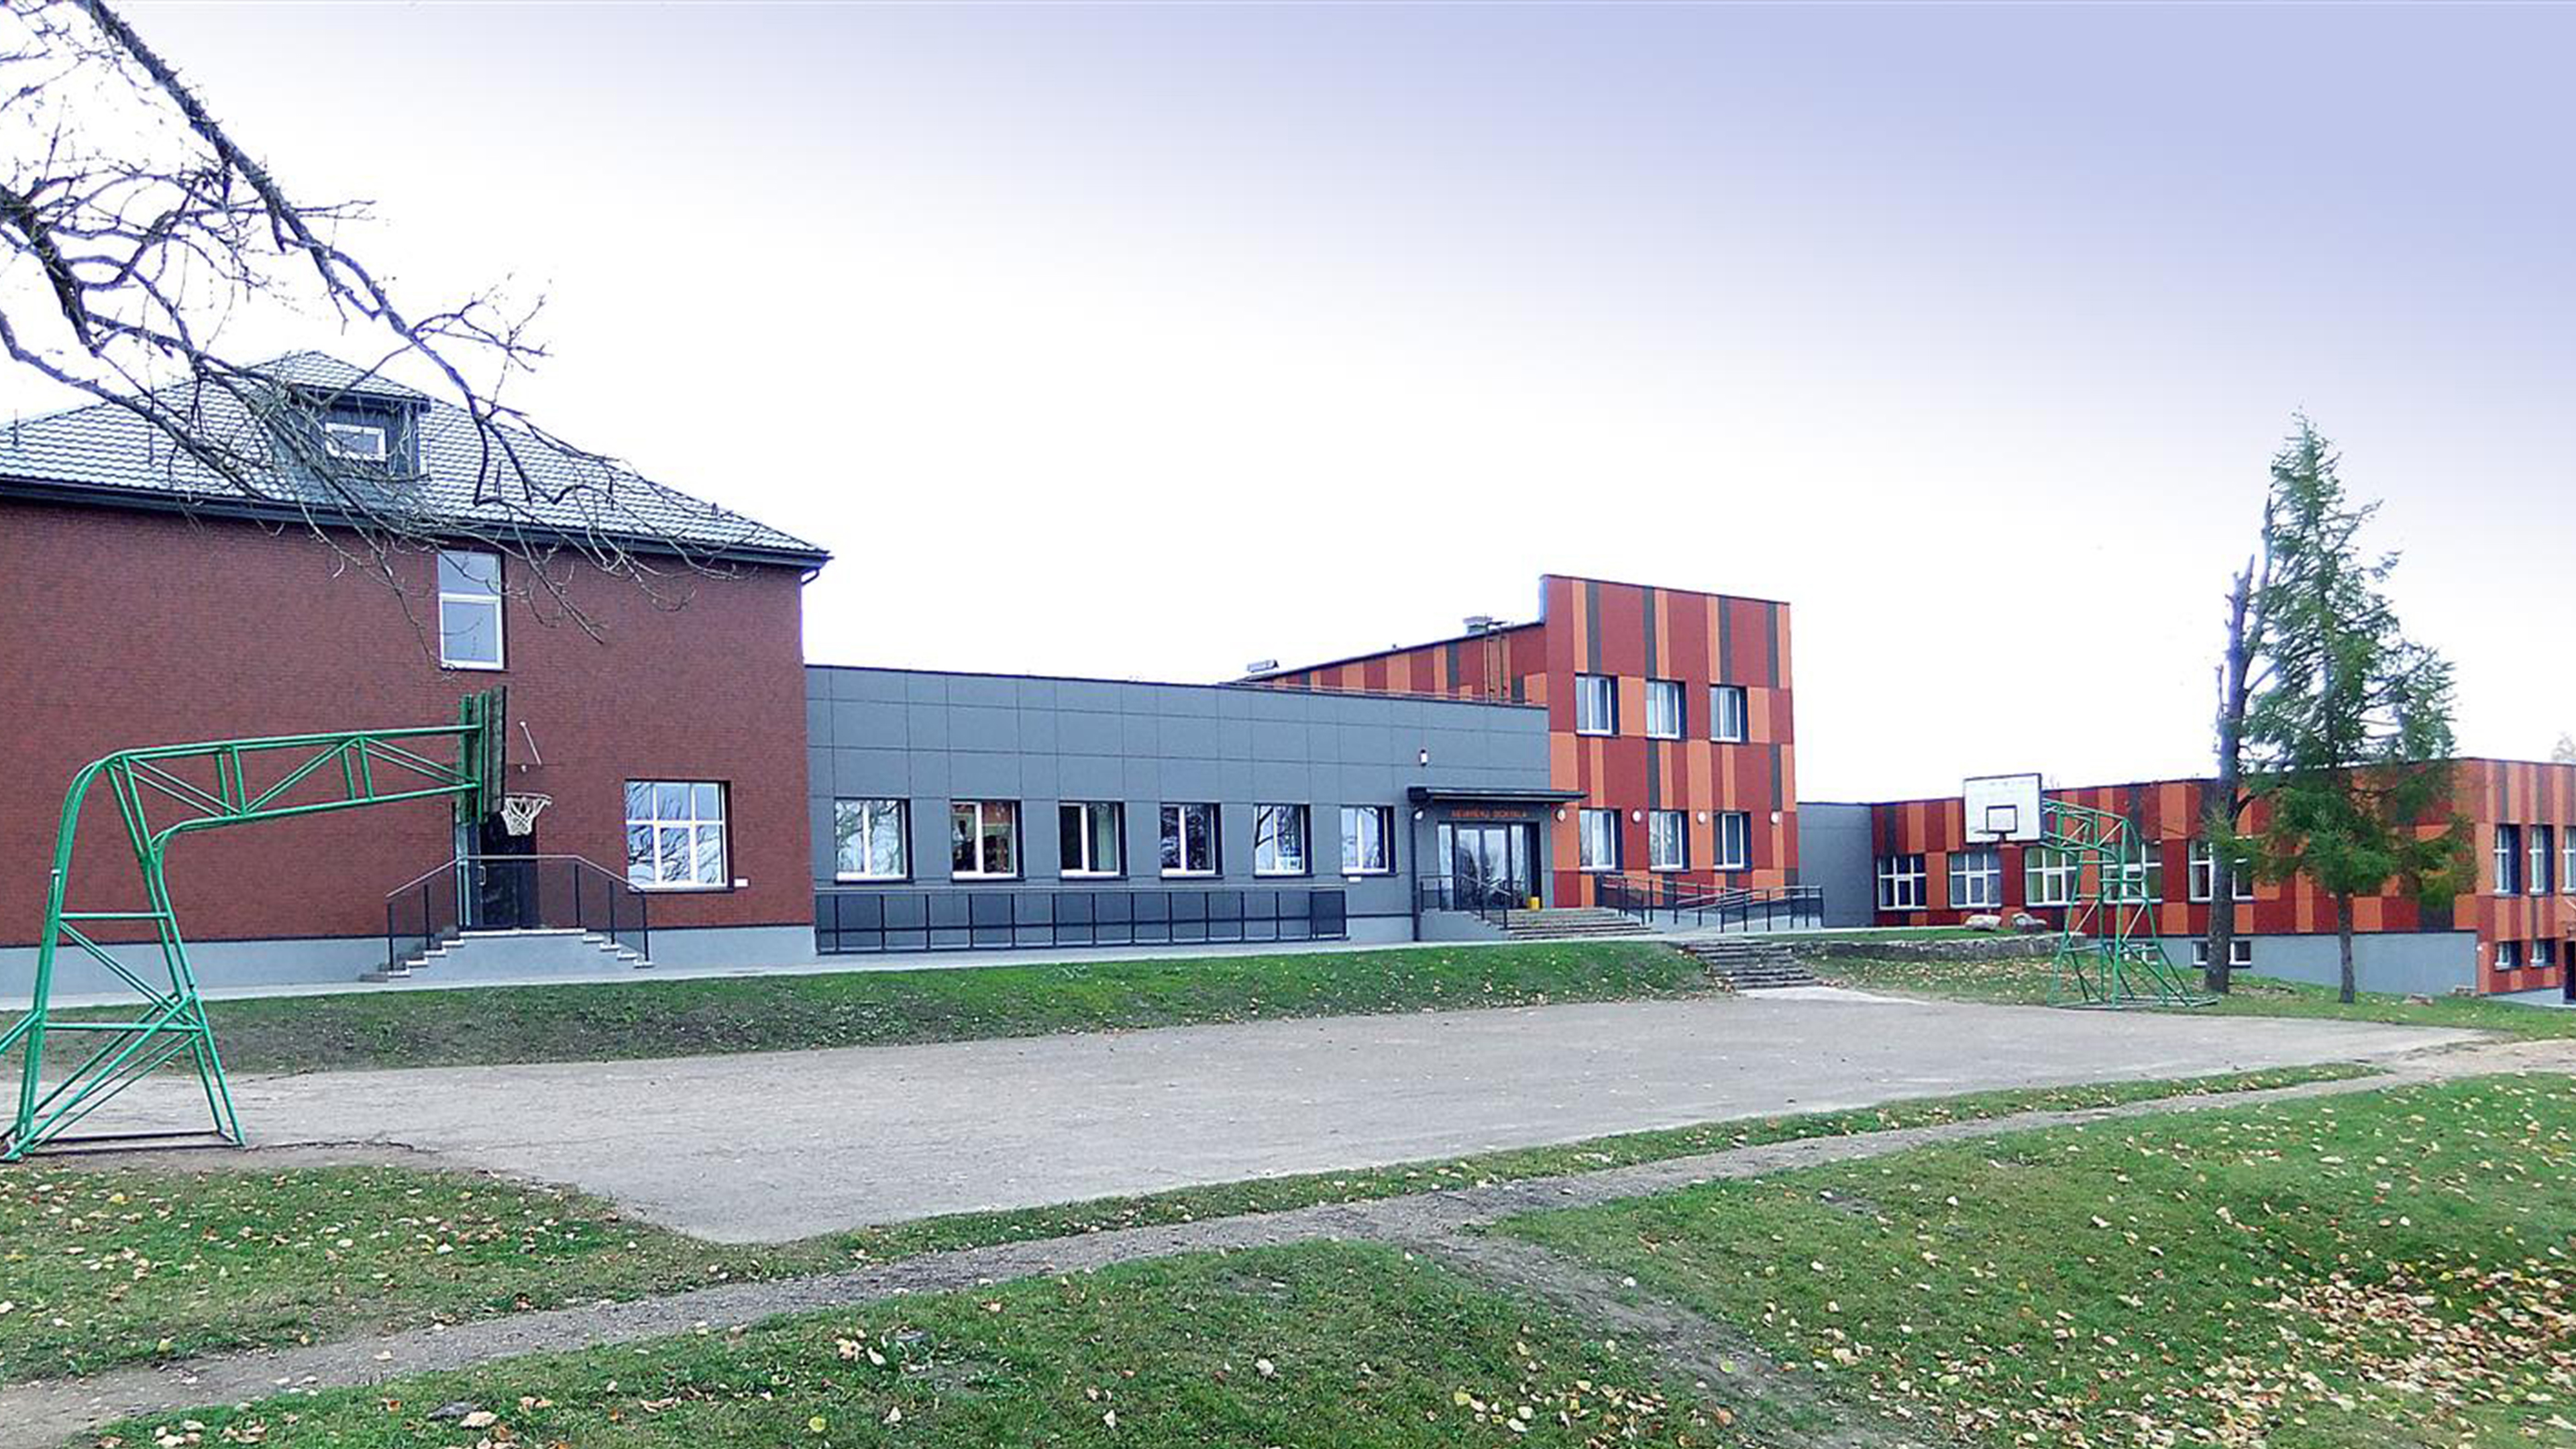 Nevarenu-Primary-School-In-Lithuania-1